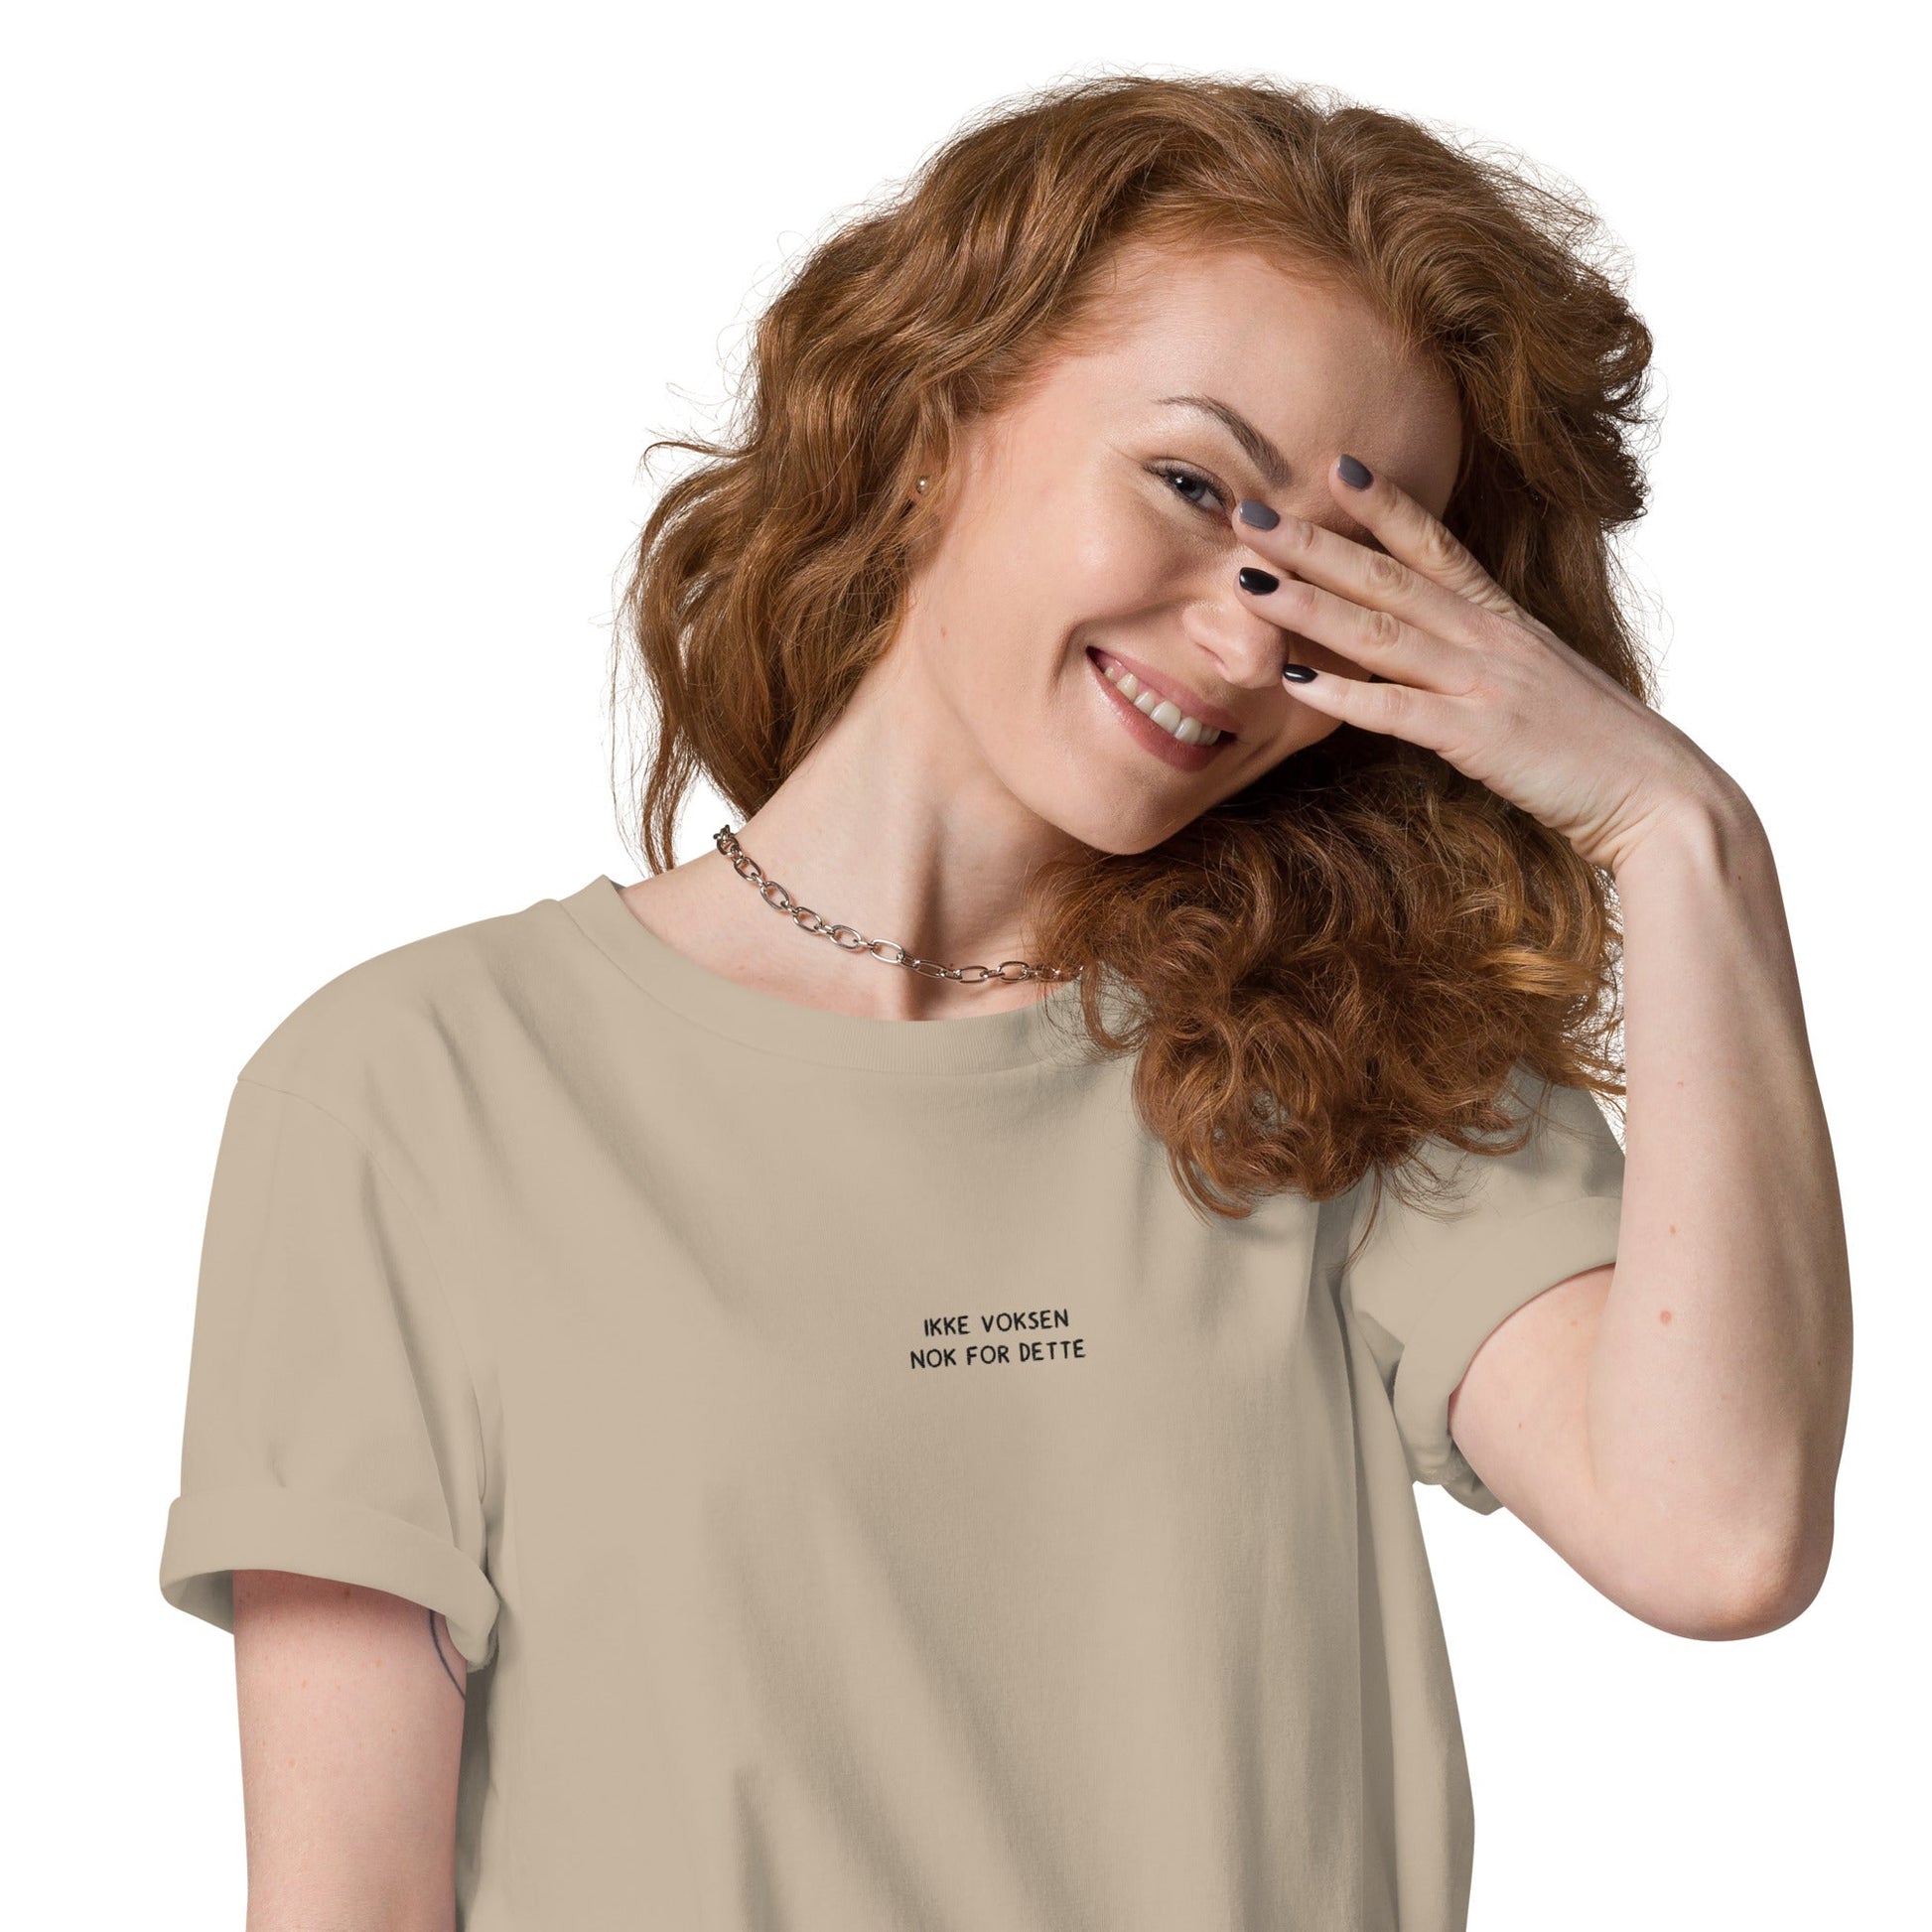 VAGPWR Ikke voksen black text - Unisex organic cotton t-shirt